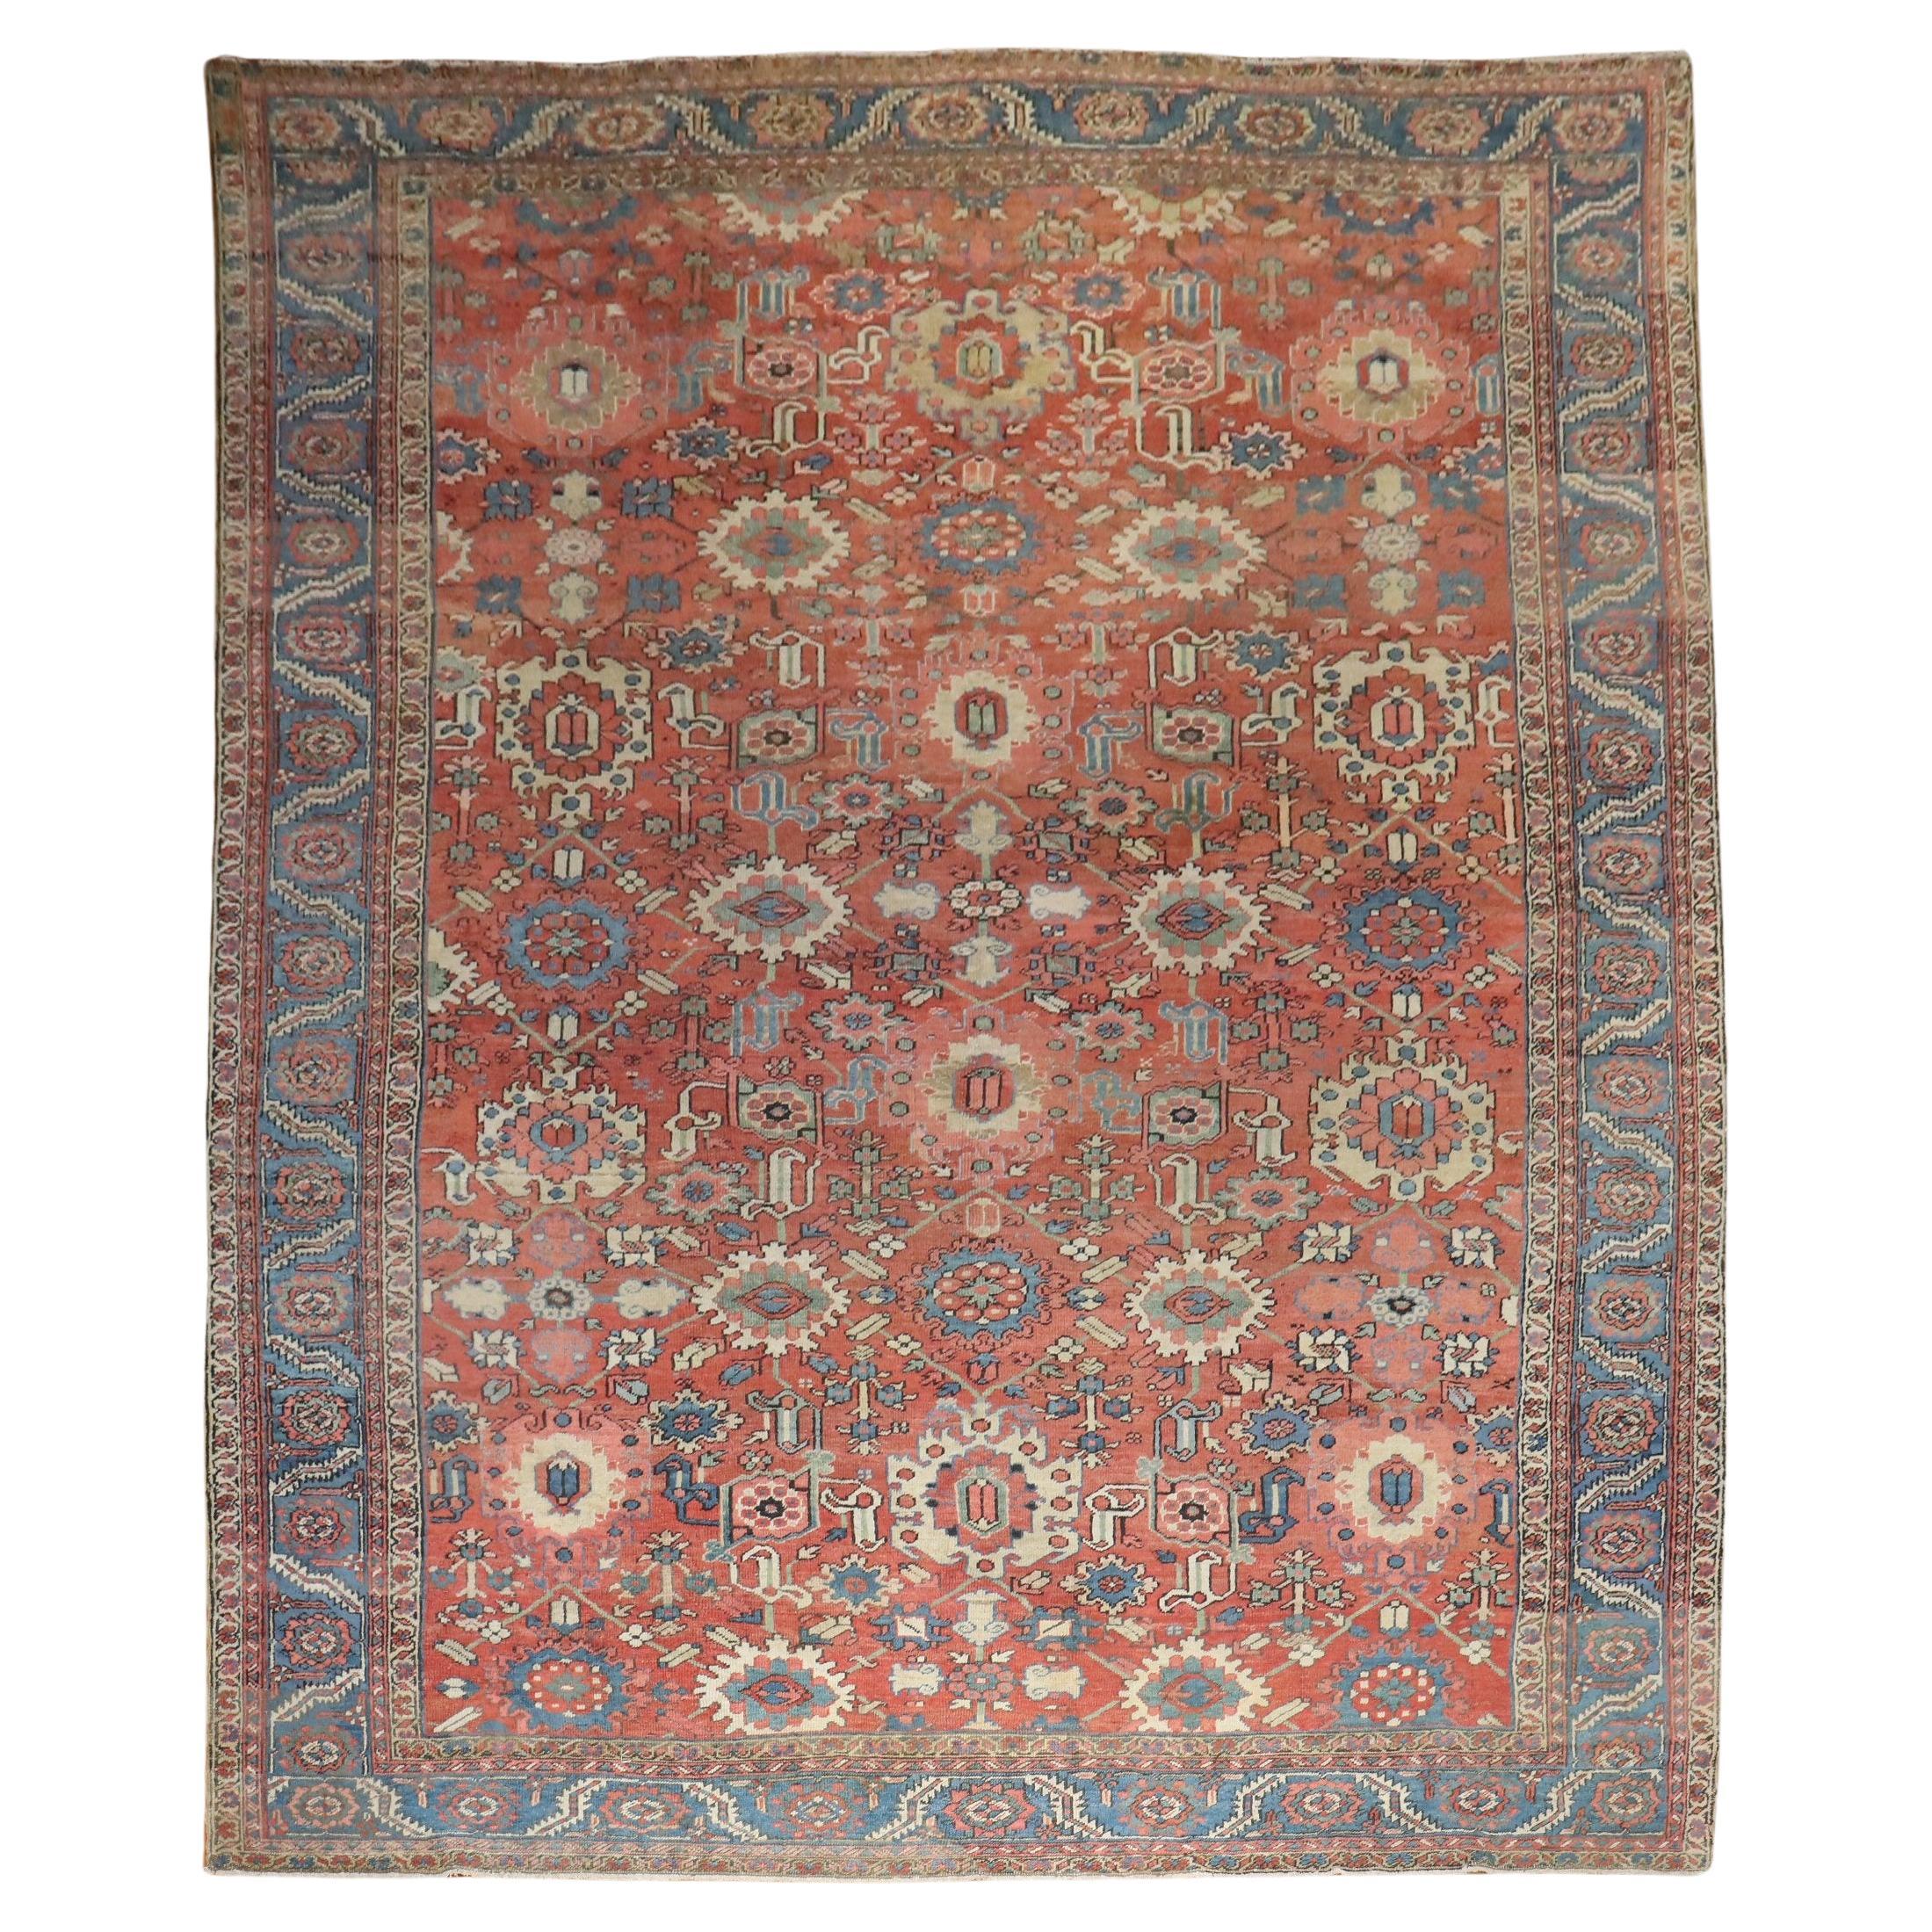 Grand tapis persan ancien Heriz de la collection Zabihi